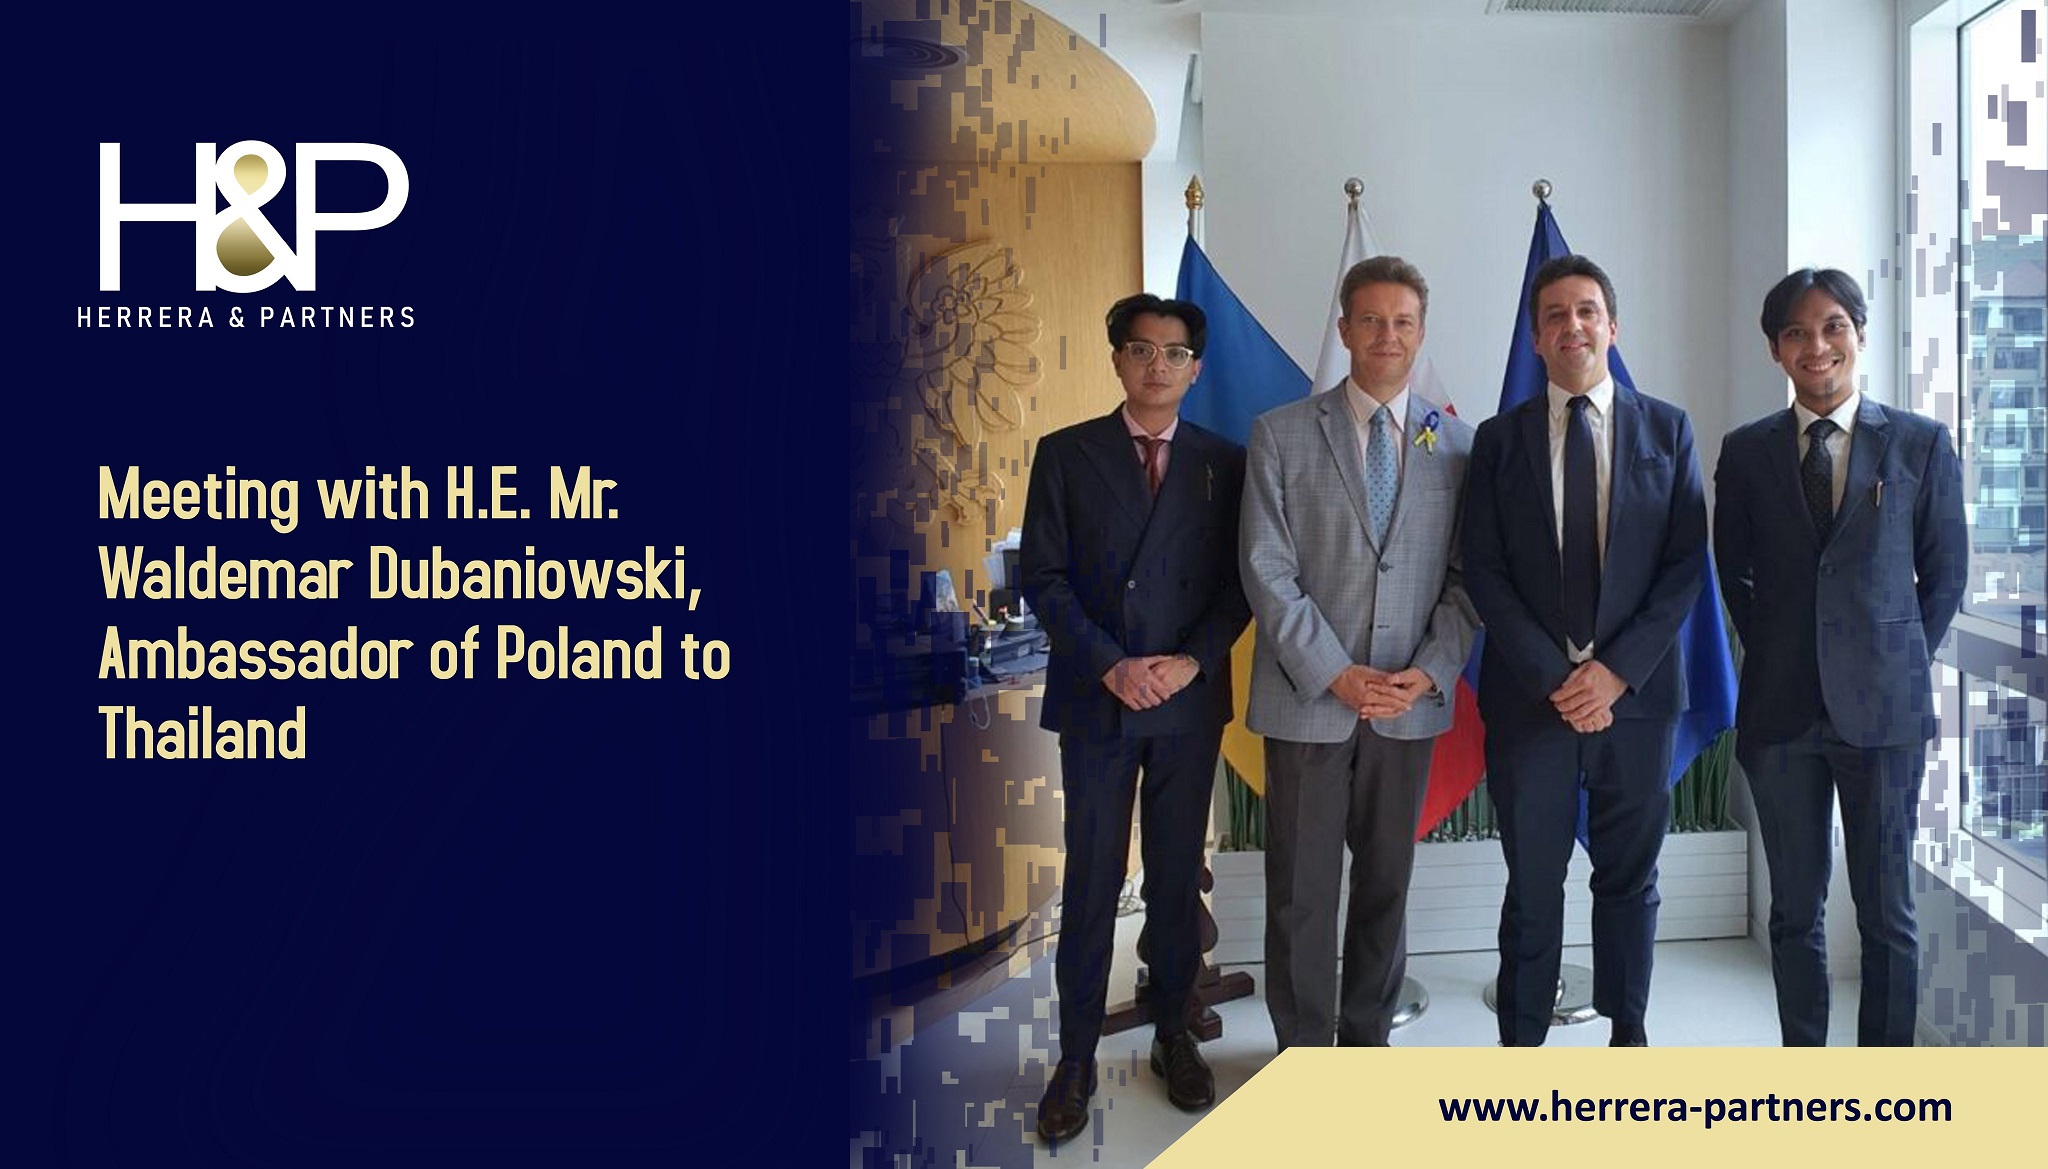 Meeting with H.E. Mr. Waldemar Dubaniowski Ambassador of Poland to Thailand HP Polish investment in Thailand